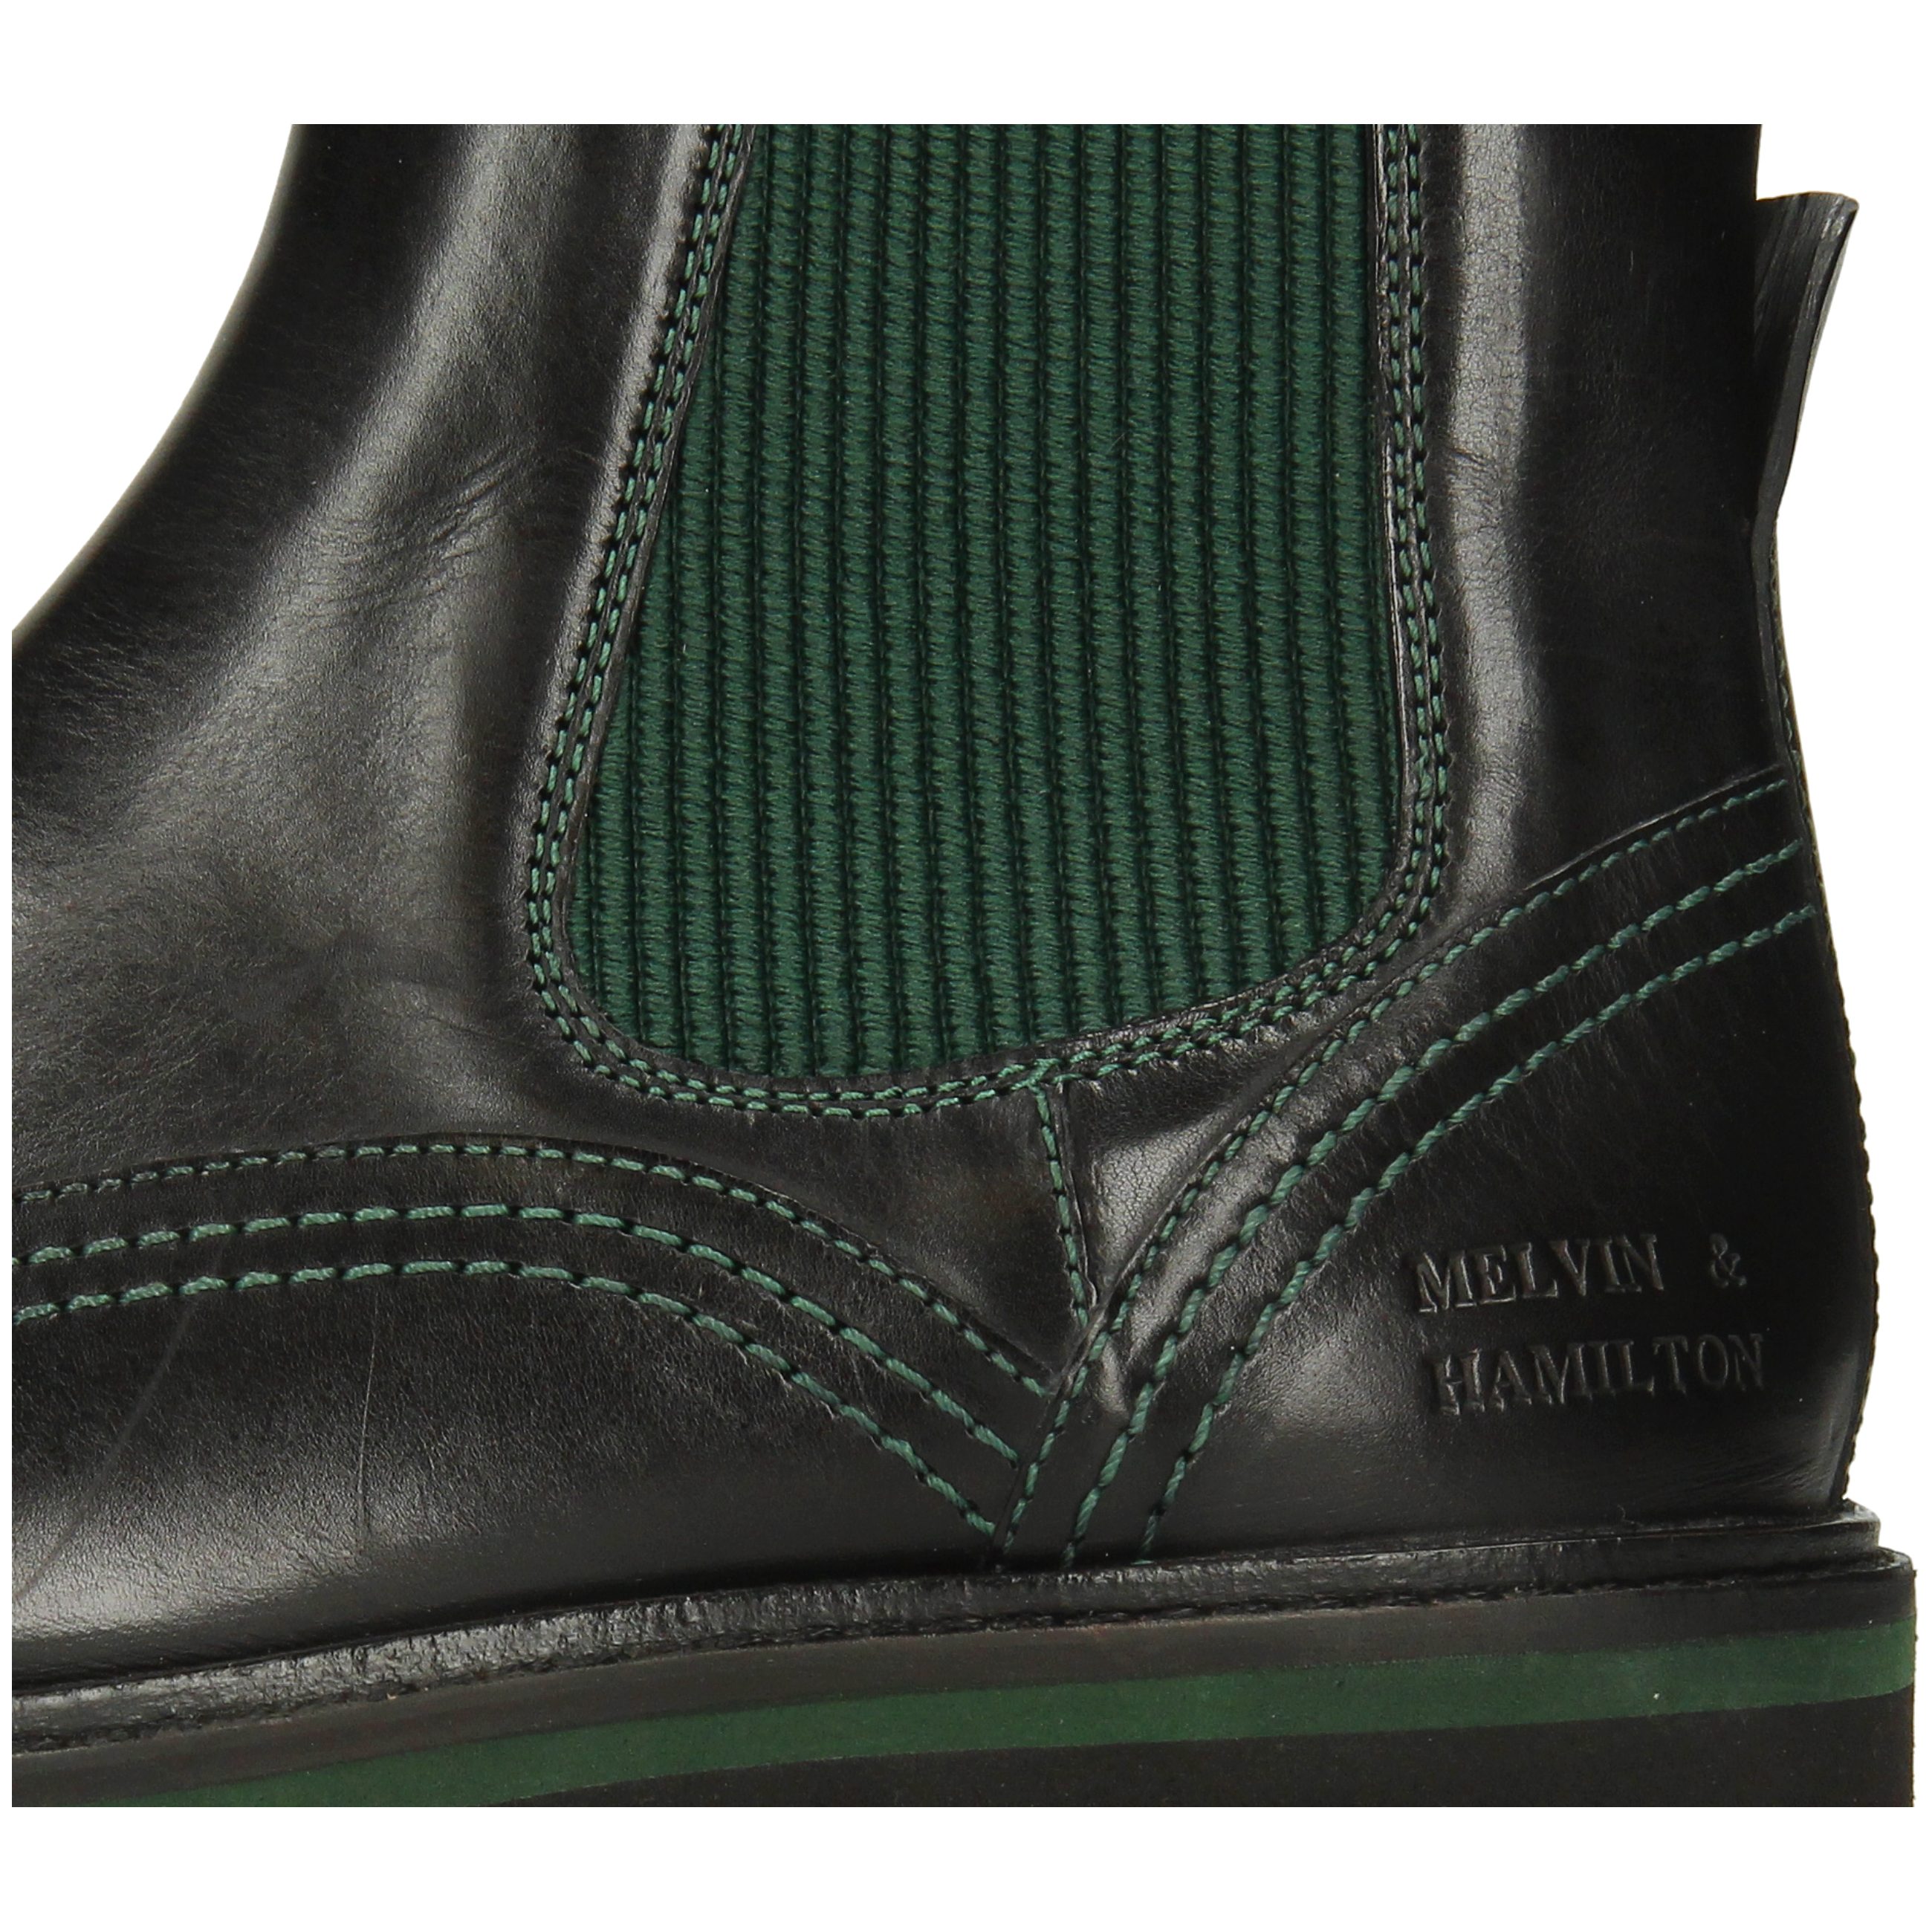 Melvin & Hamilton Sybill 33 Crust Green Black Stiefelette Stitching